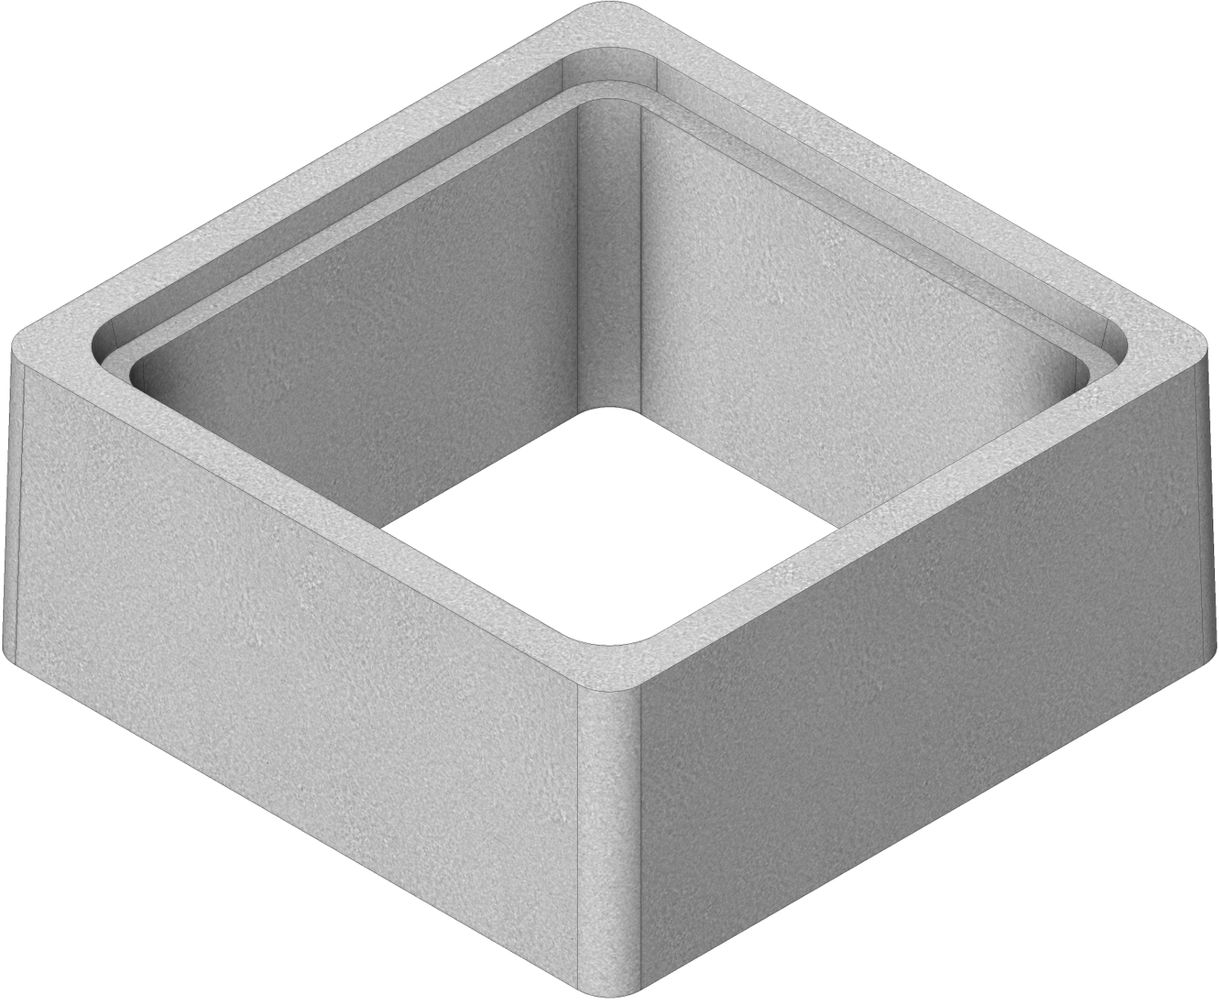 rehausse-beton-boite-pluviale-rp30-310x310-h290-thebault-0